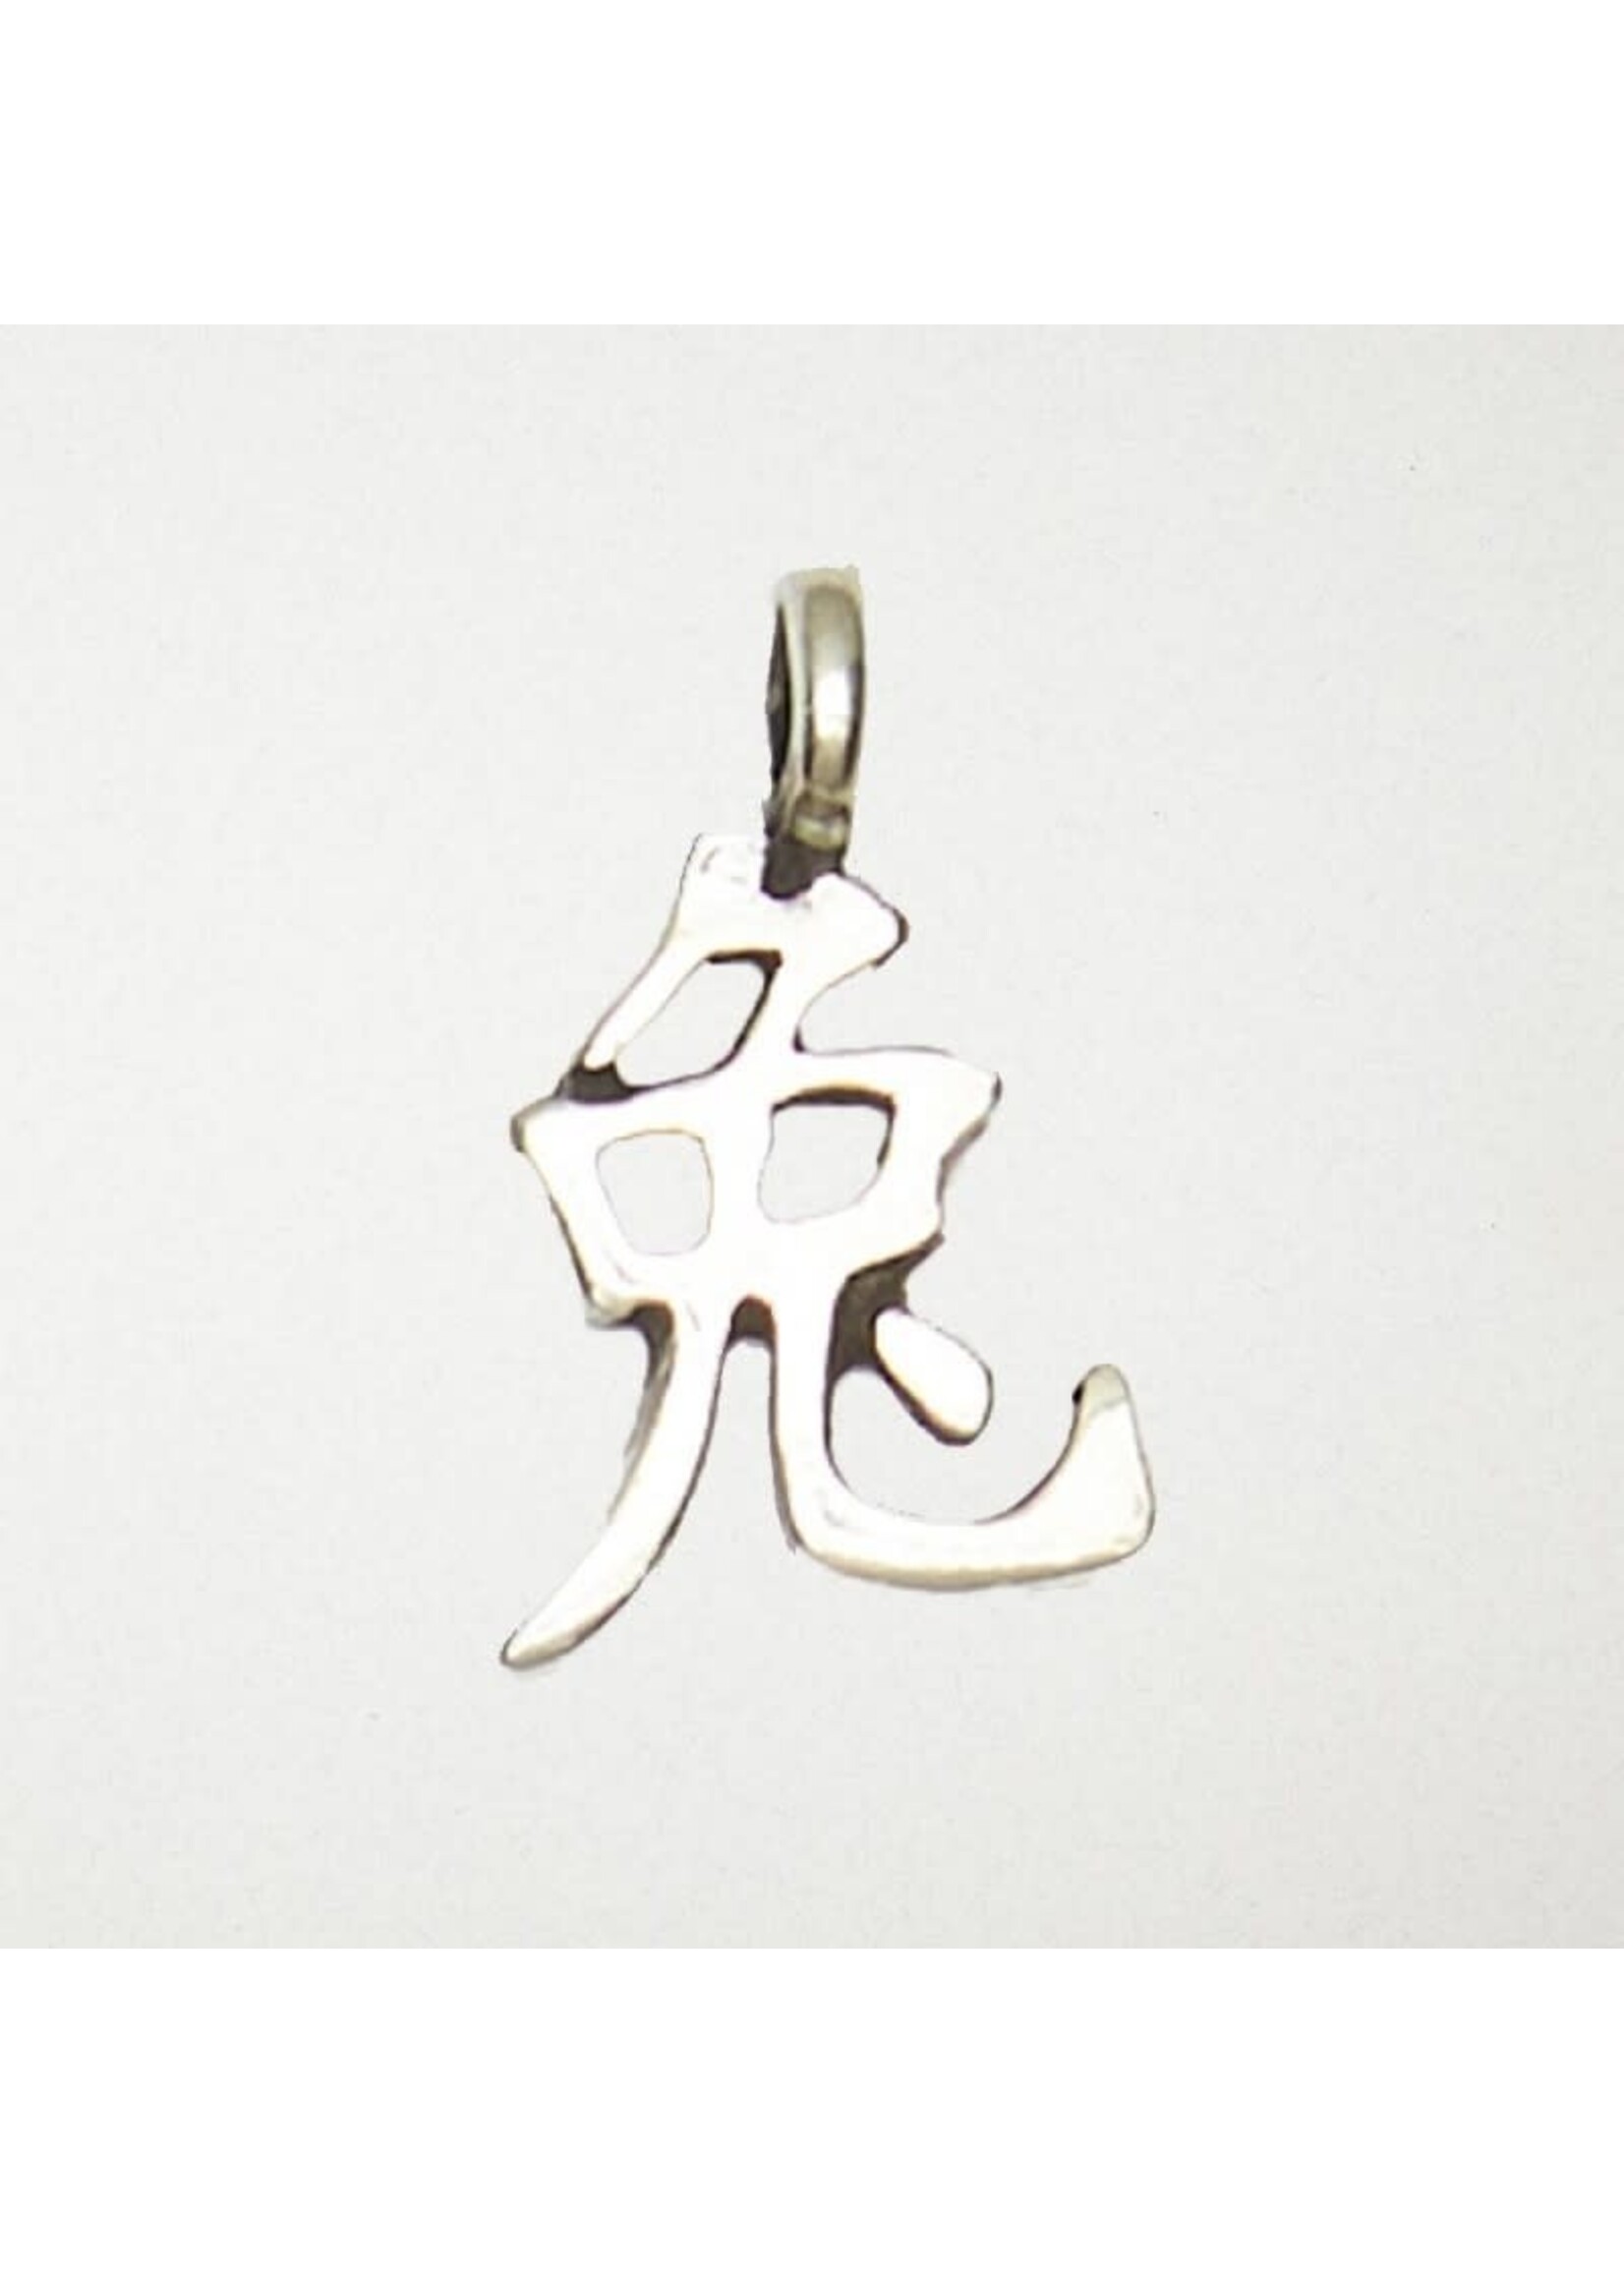 Chinese Astrology Pewter Pendant - Rabbit